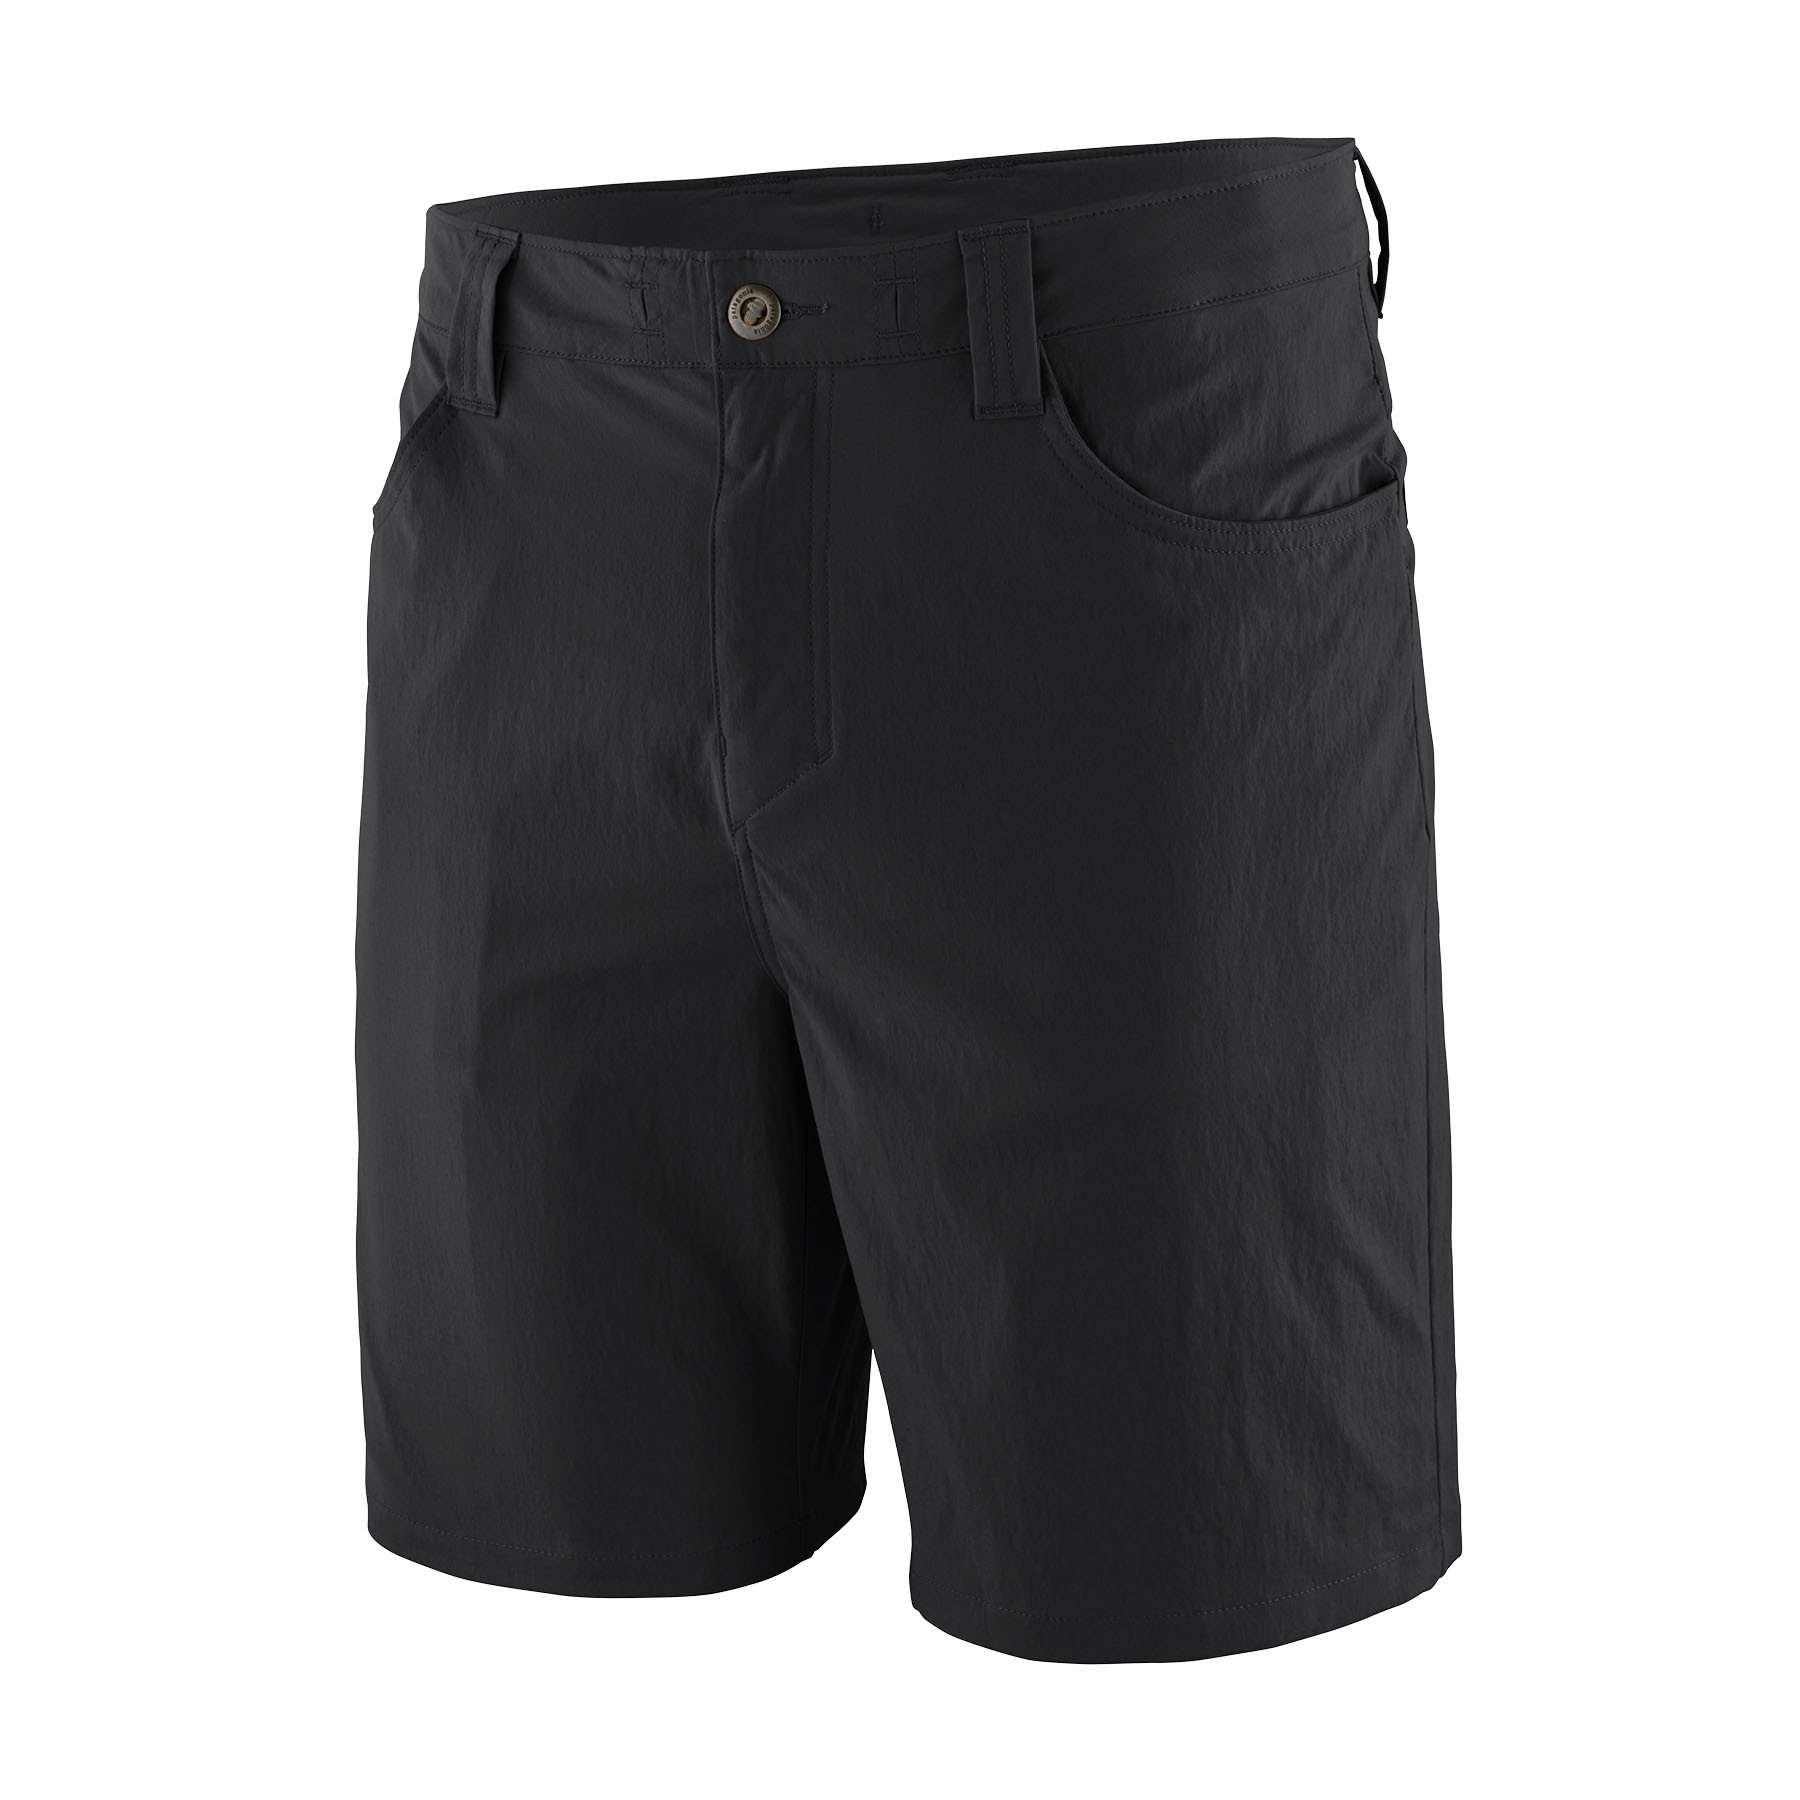 Patagonia Men's Quandary Shorts - 10" : Black